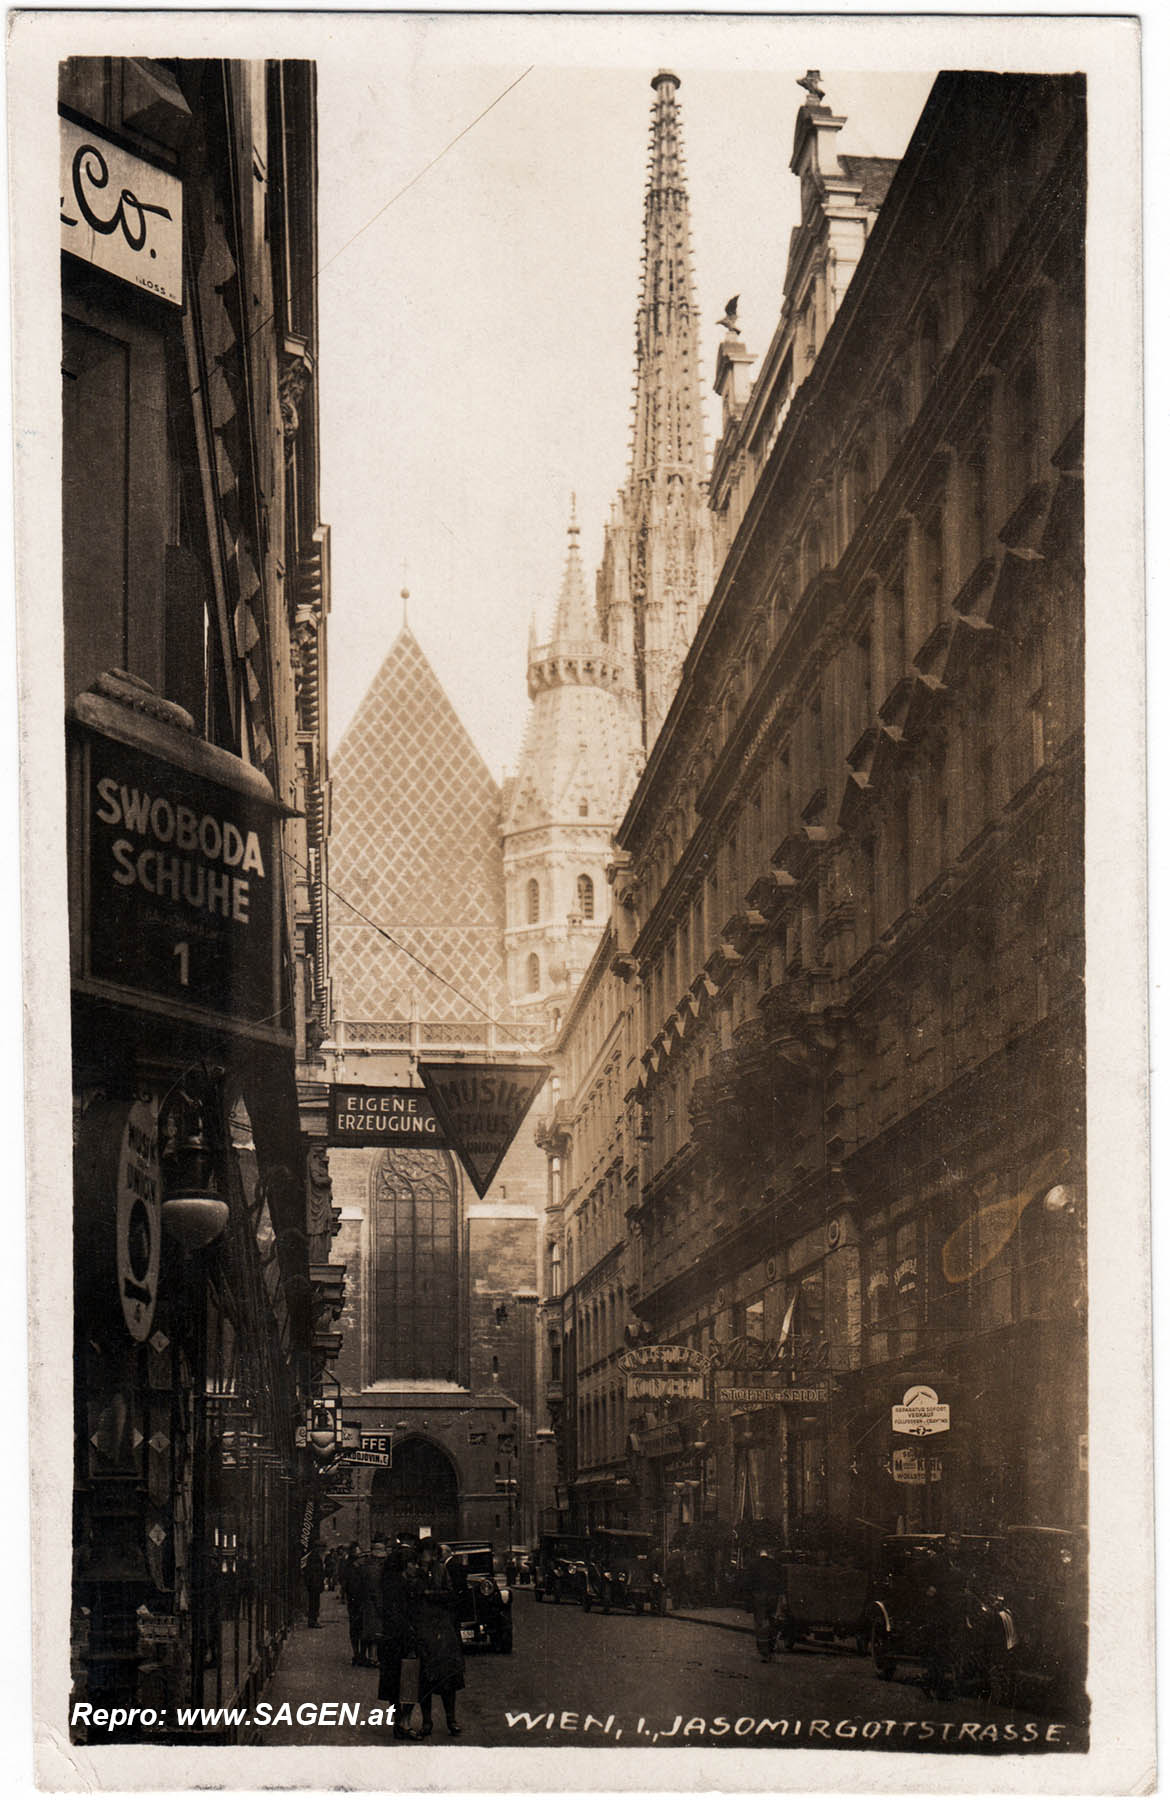 Wien Jasomirgottstraße um 1928